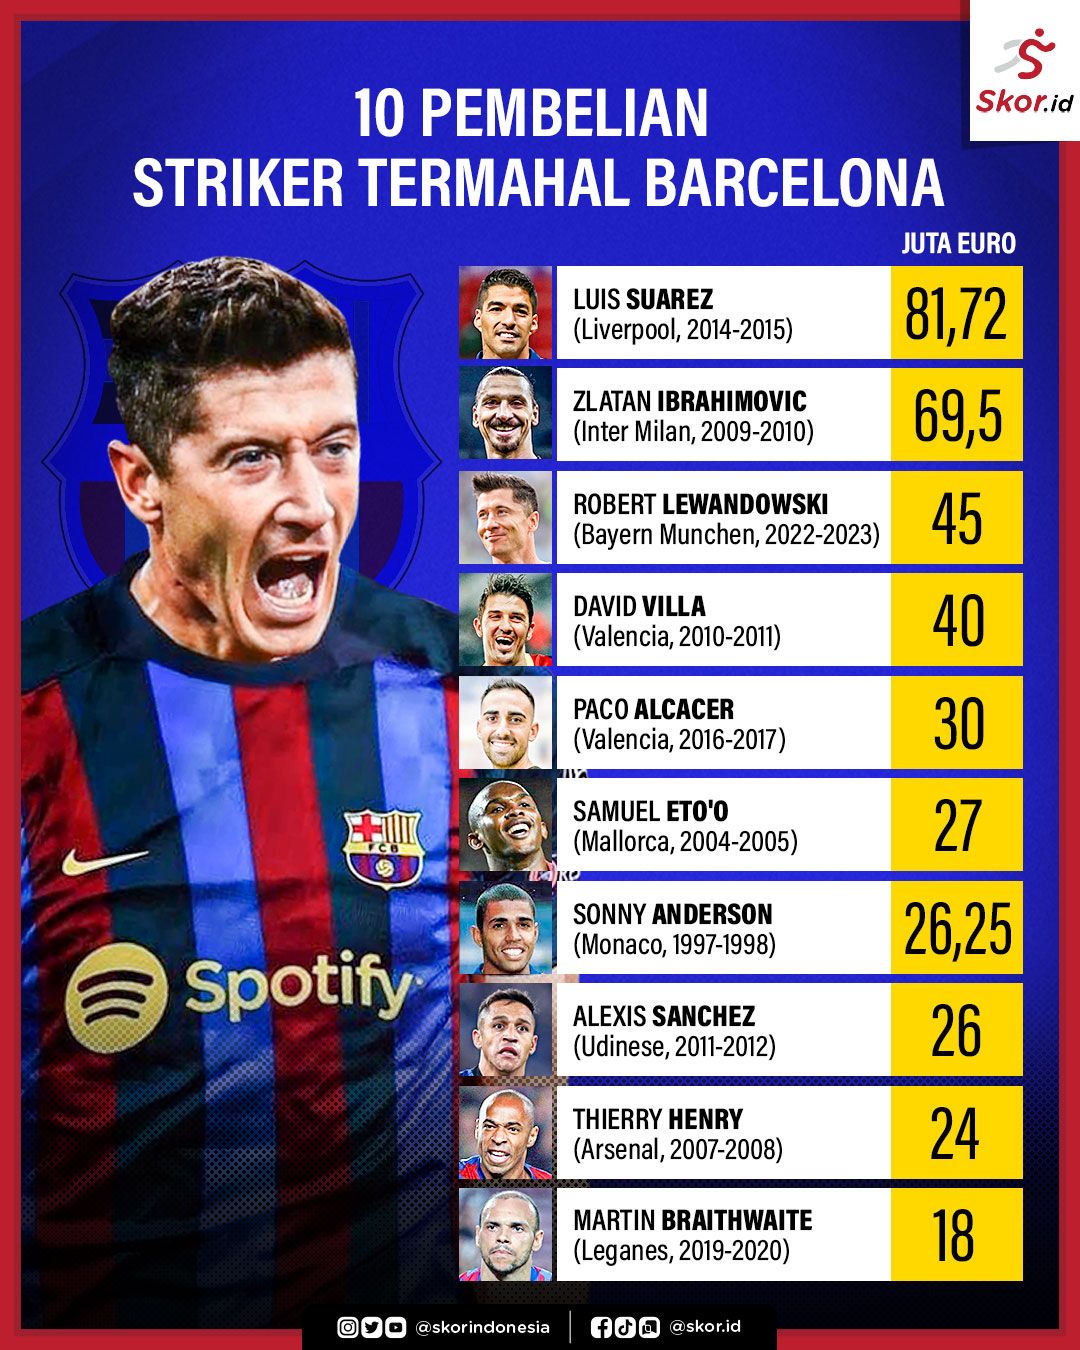 10 Pembelian Striker Termahal Barcelona